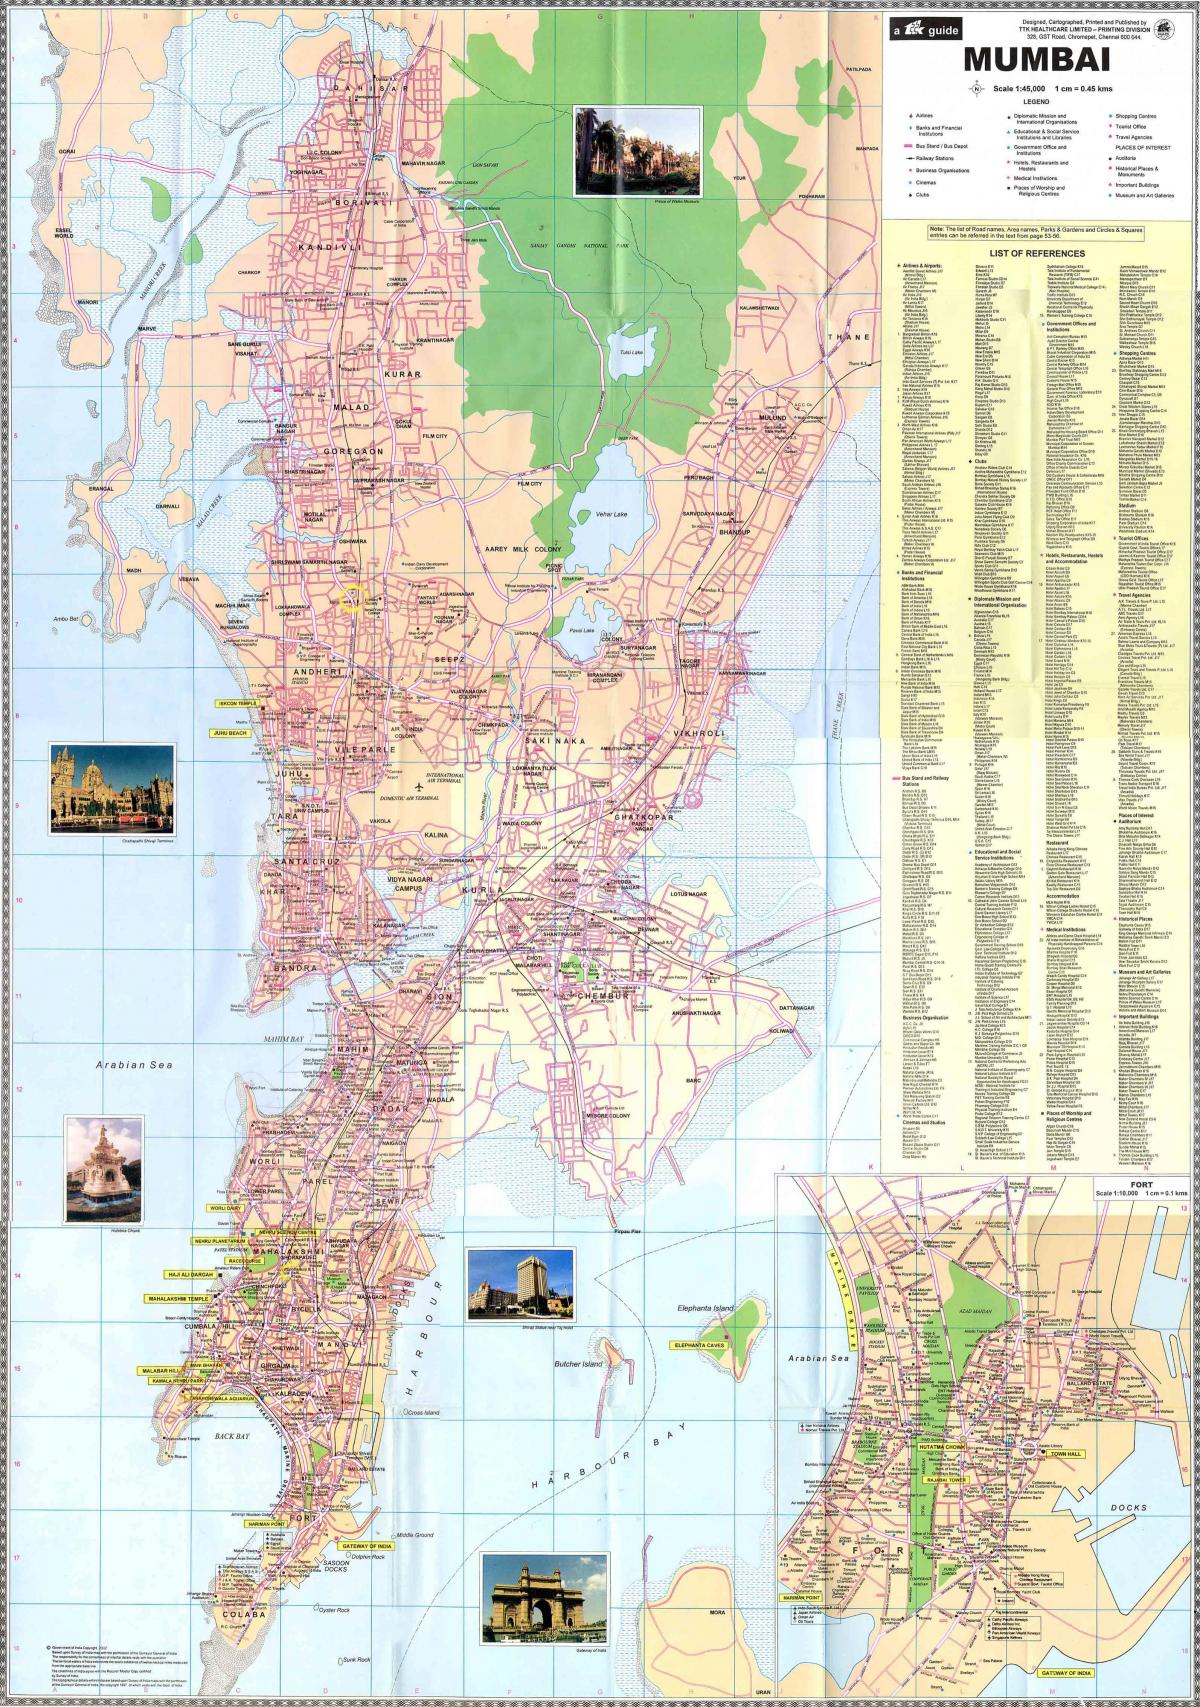 Plan des routes de Mumbai - Bombay